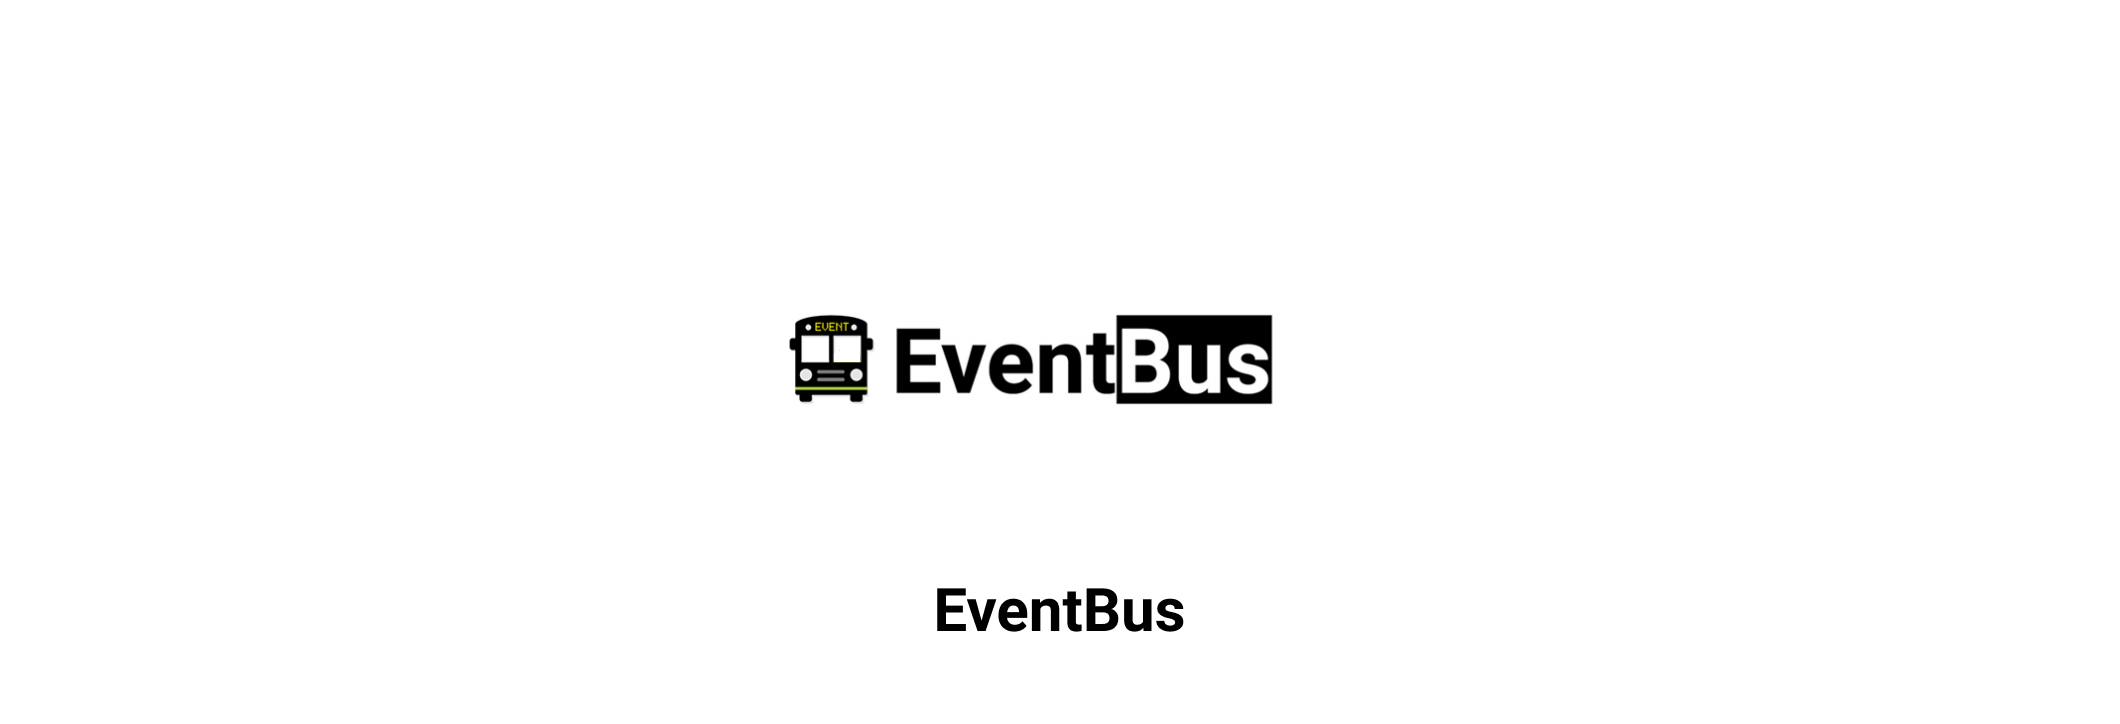 Best Android Development Tools eventbus